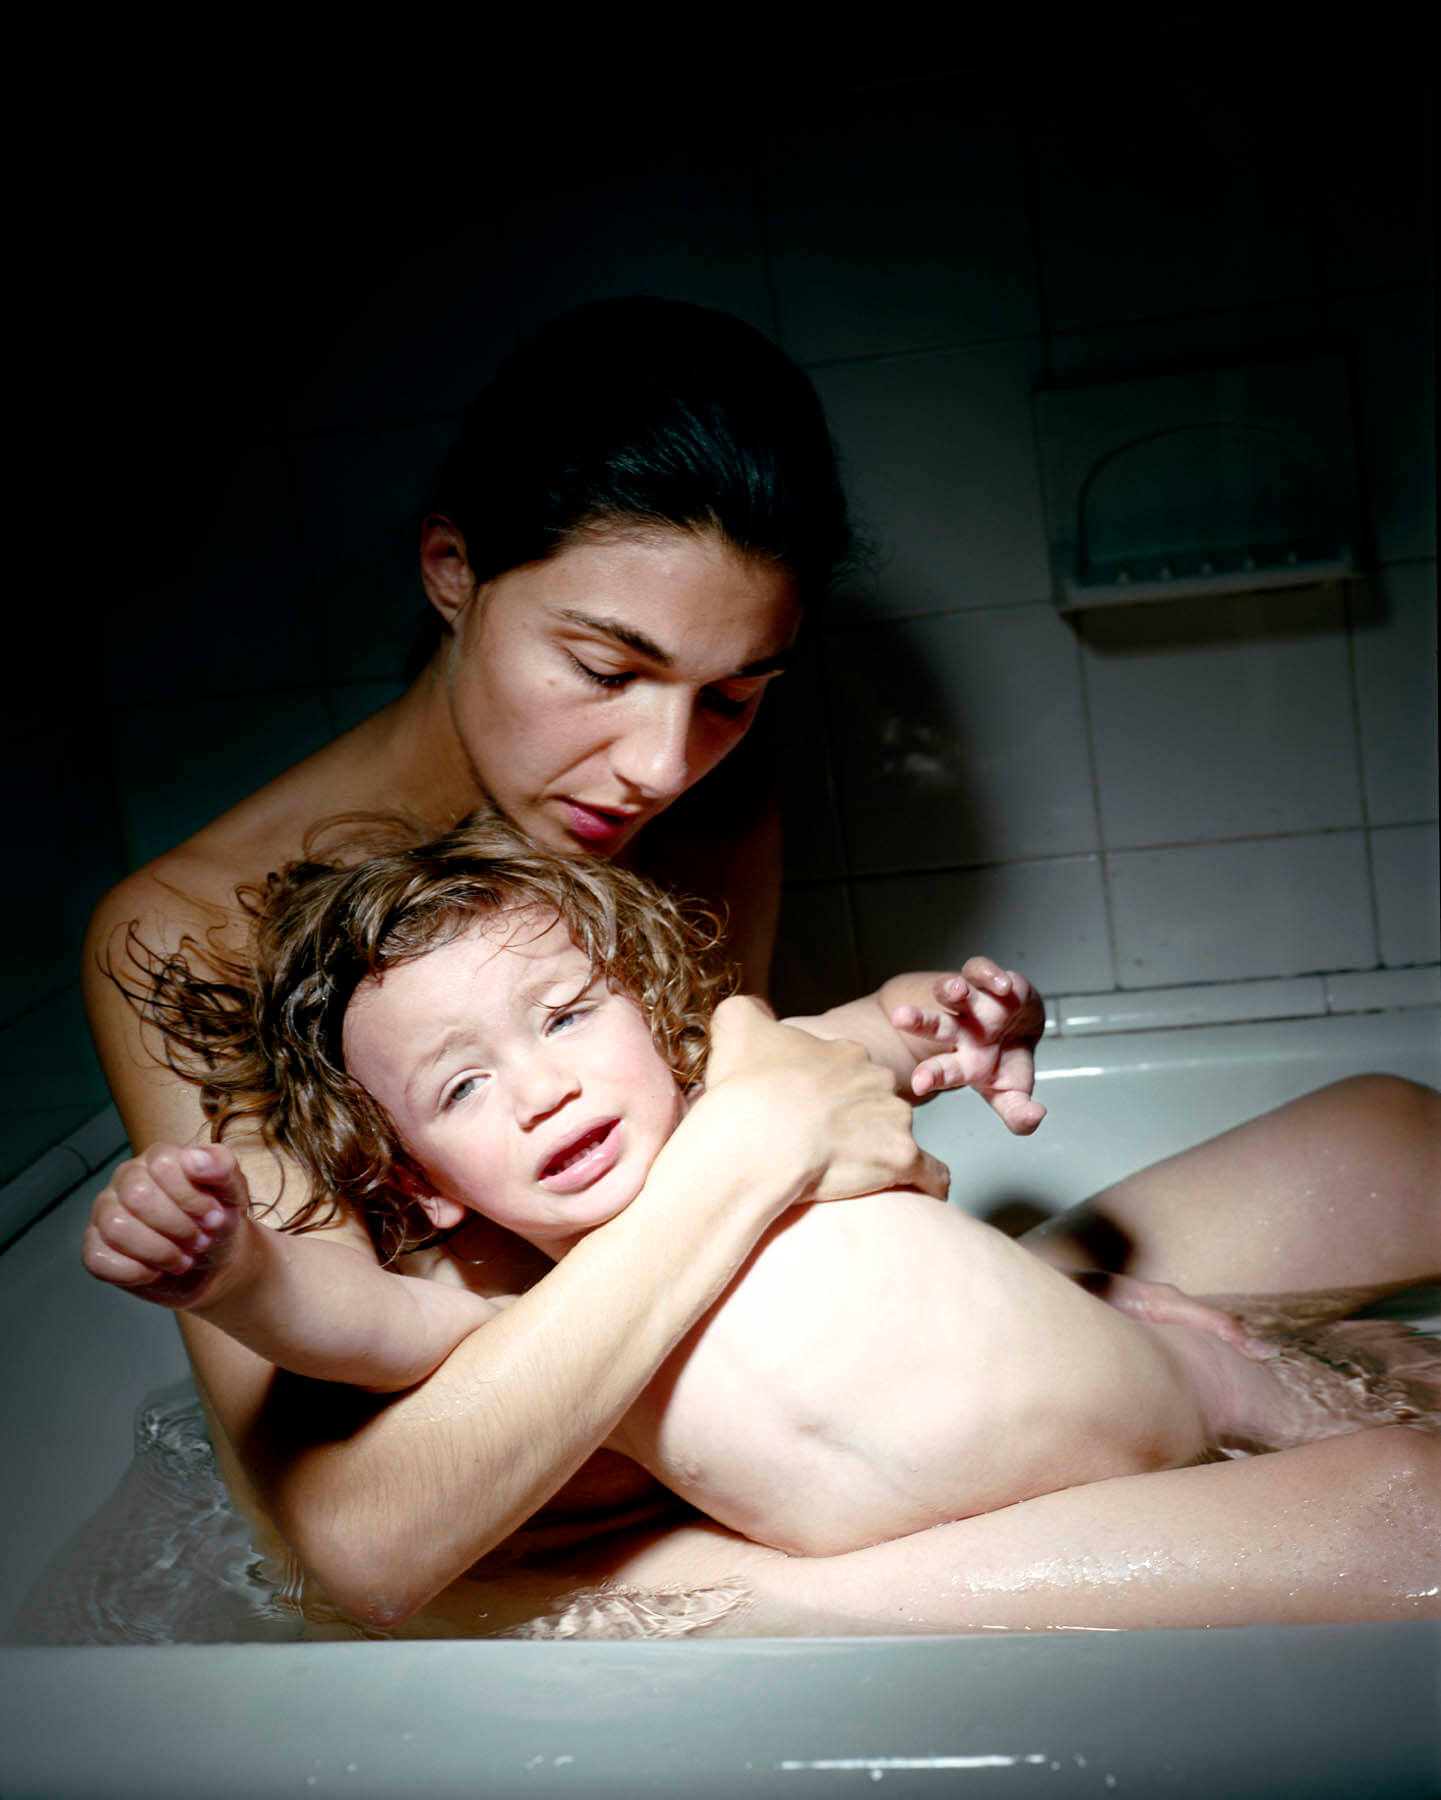 Bath, 2006 - By Elinor Carucci